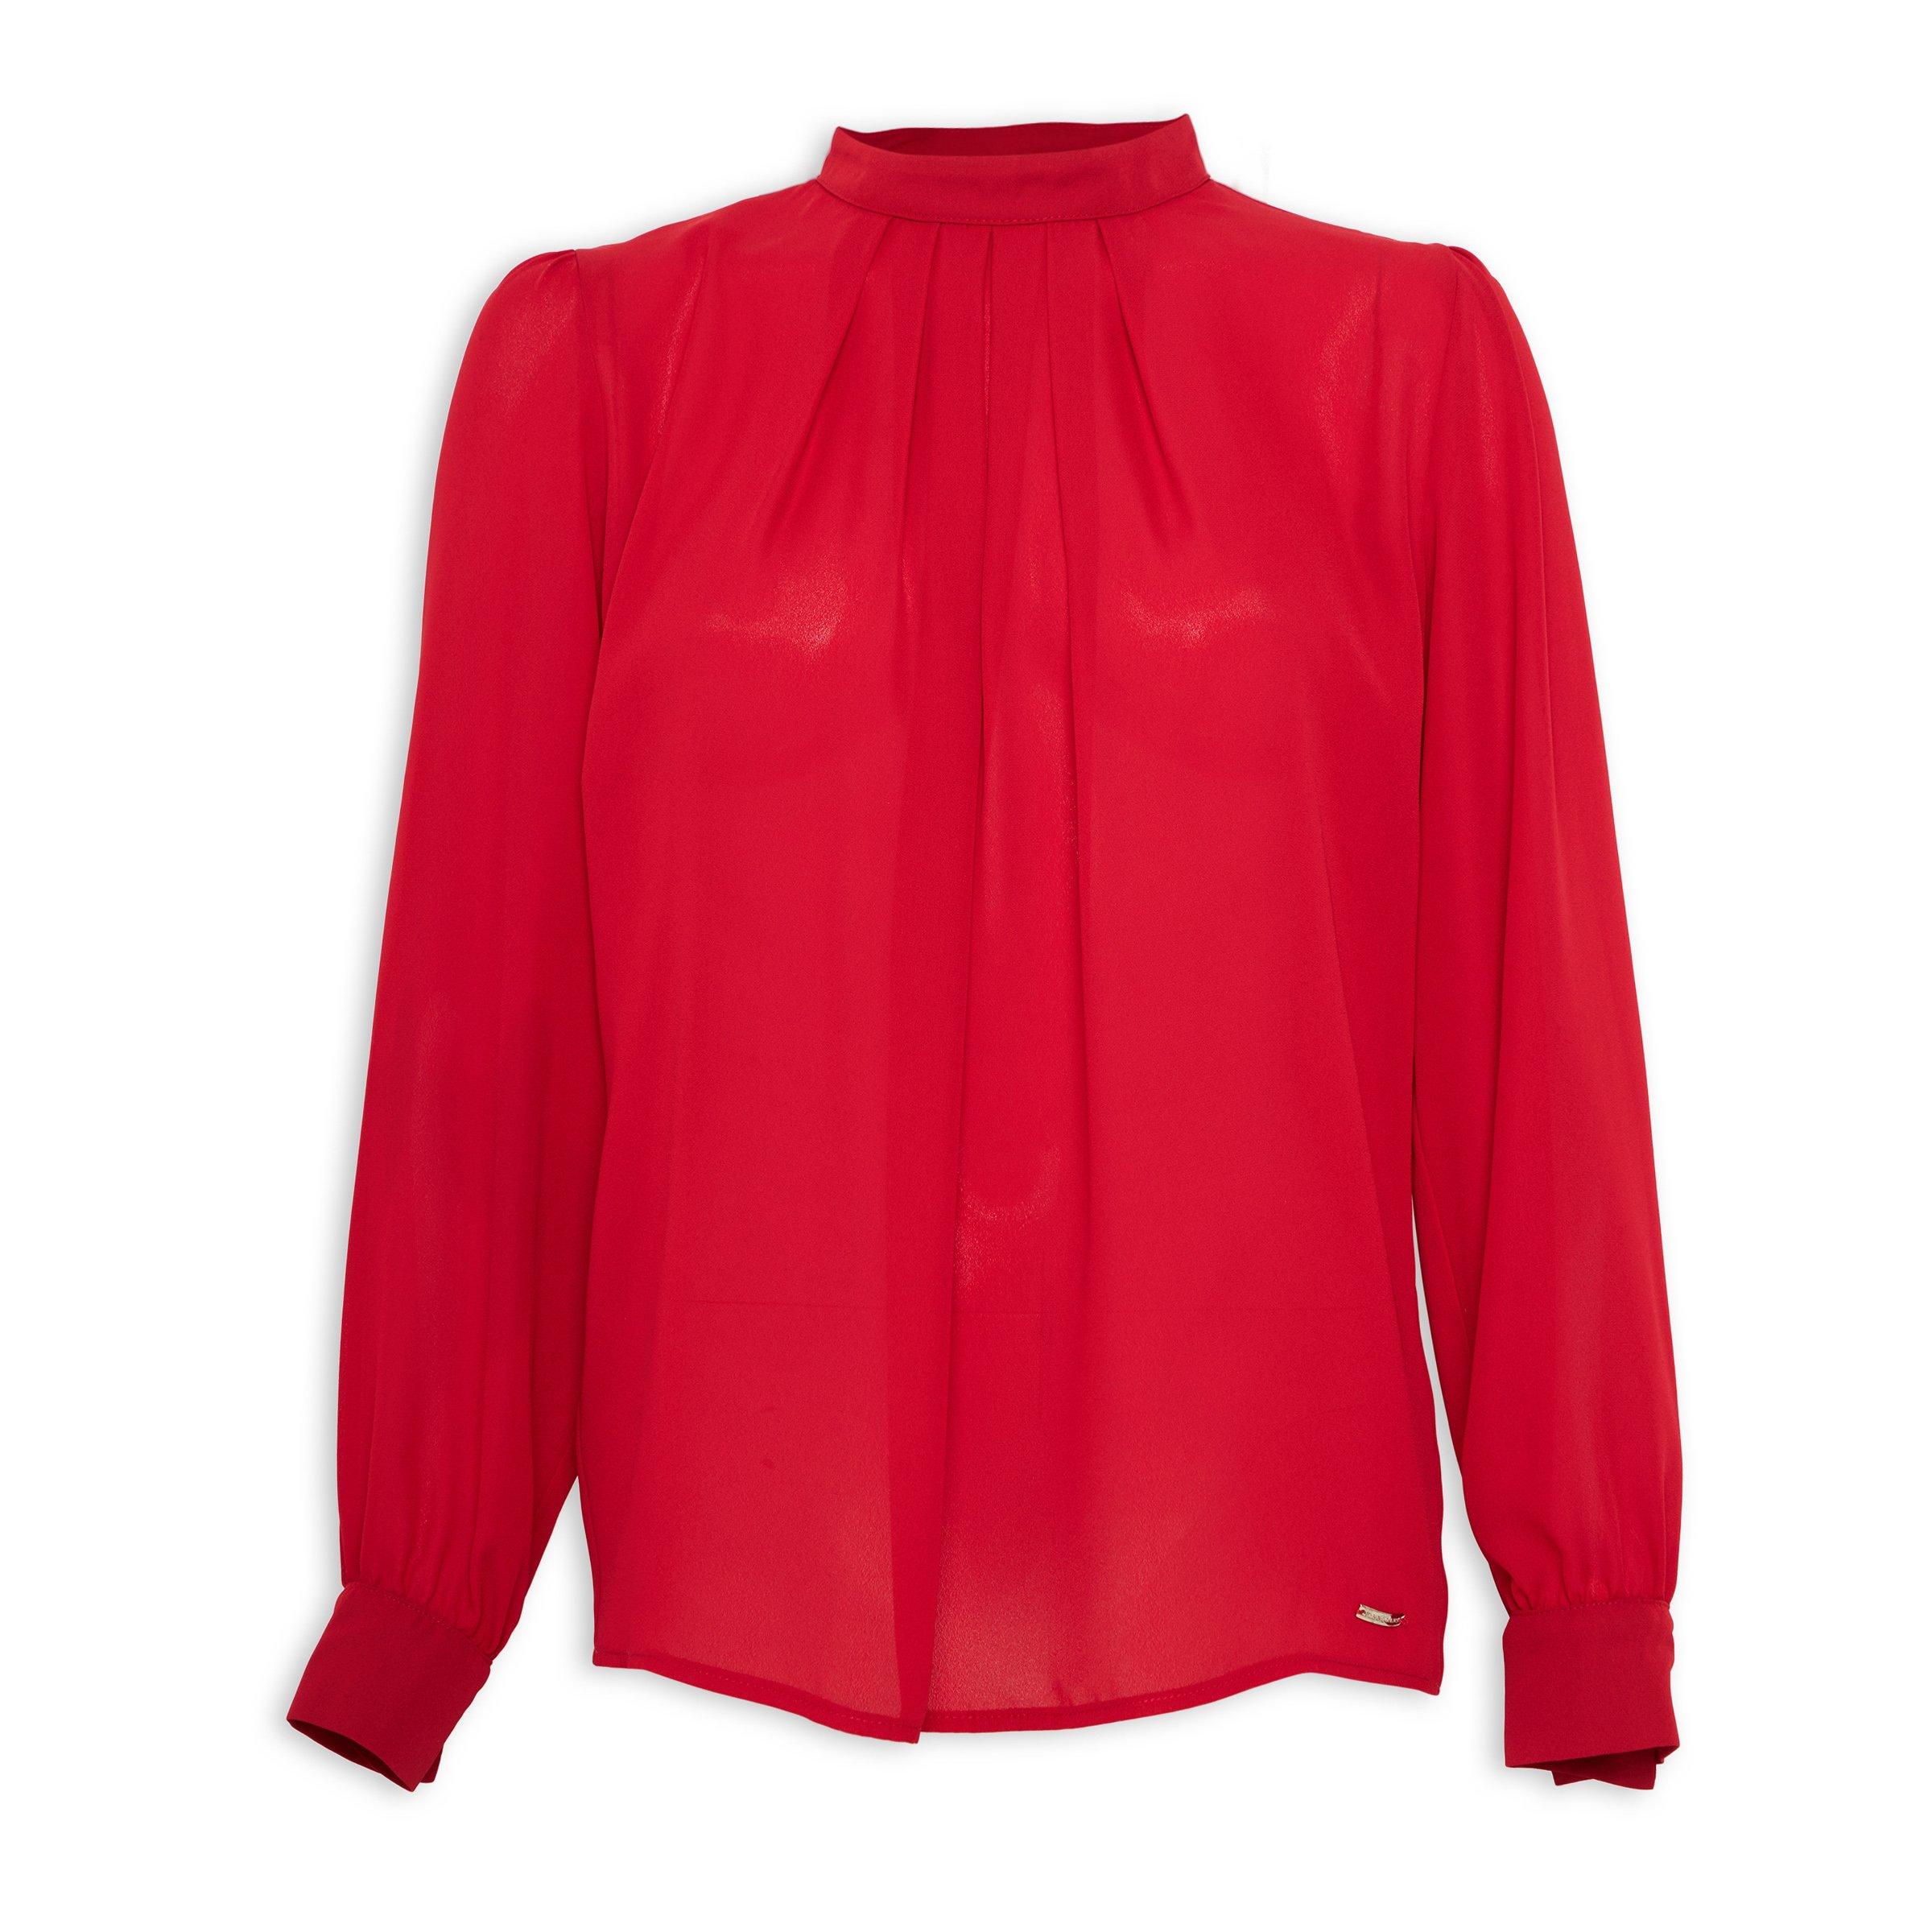 Buy Finnigans Red Georgette Blouse Online | Truworths